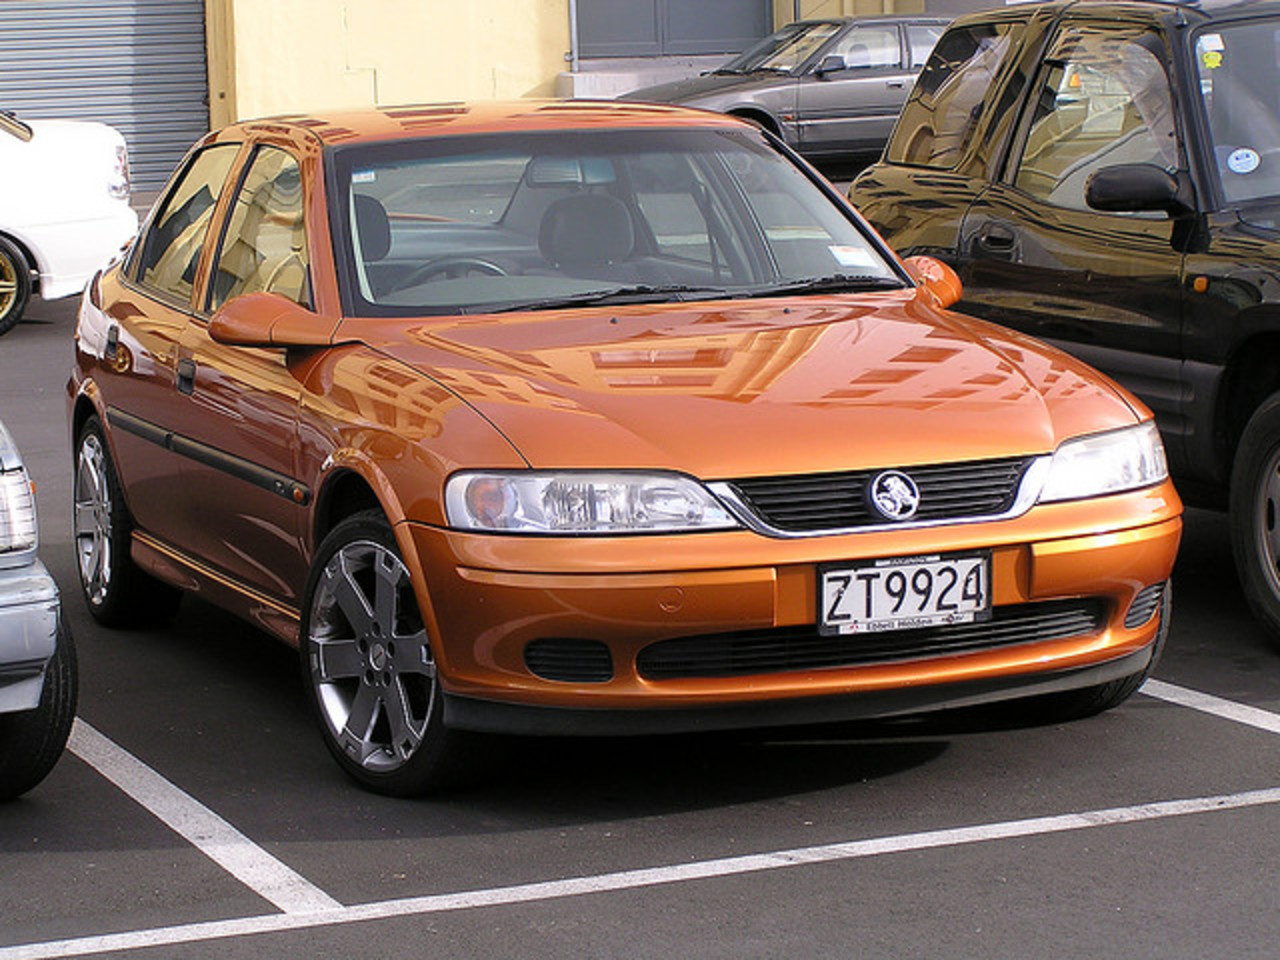 Flickr: The Metallic Orange, Bronze, or Copper Coloured Cars Pool